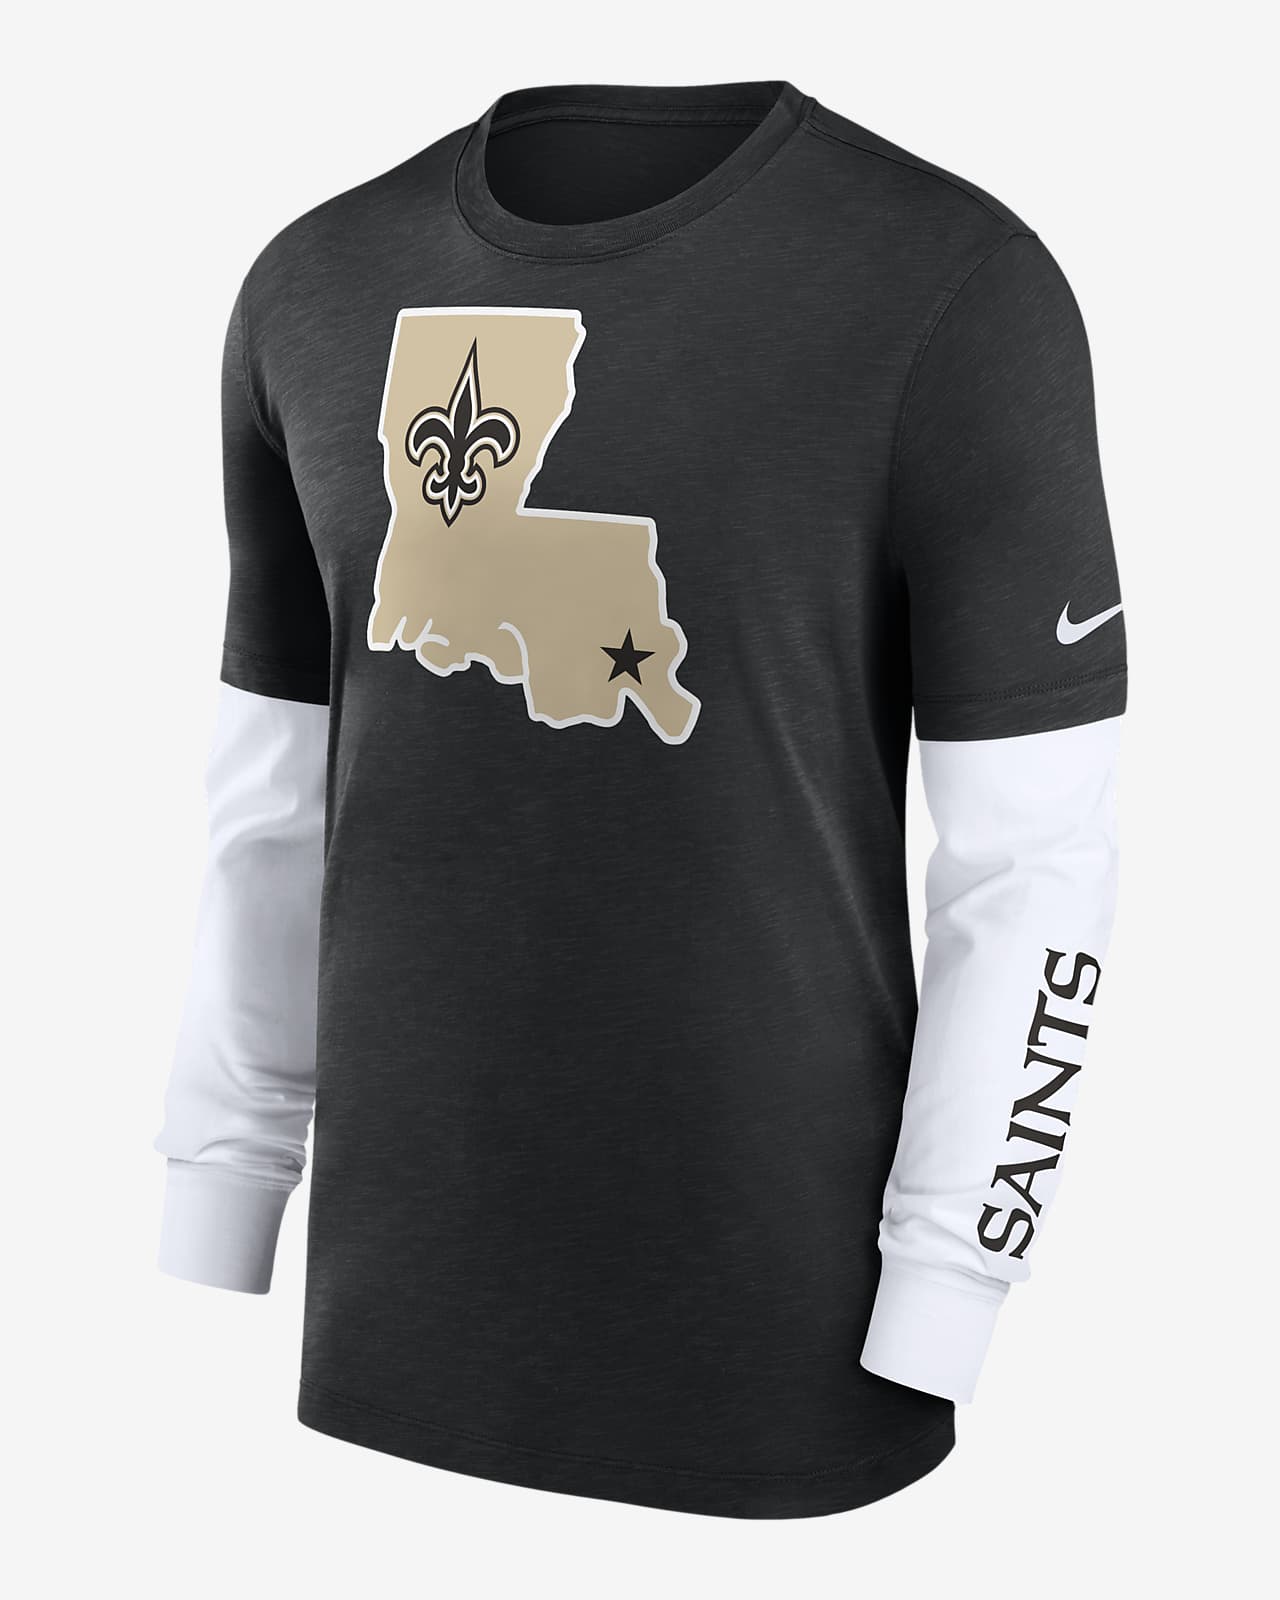 new orleans saints long sleeve jersey